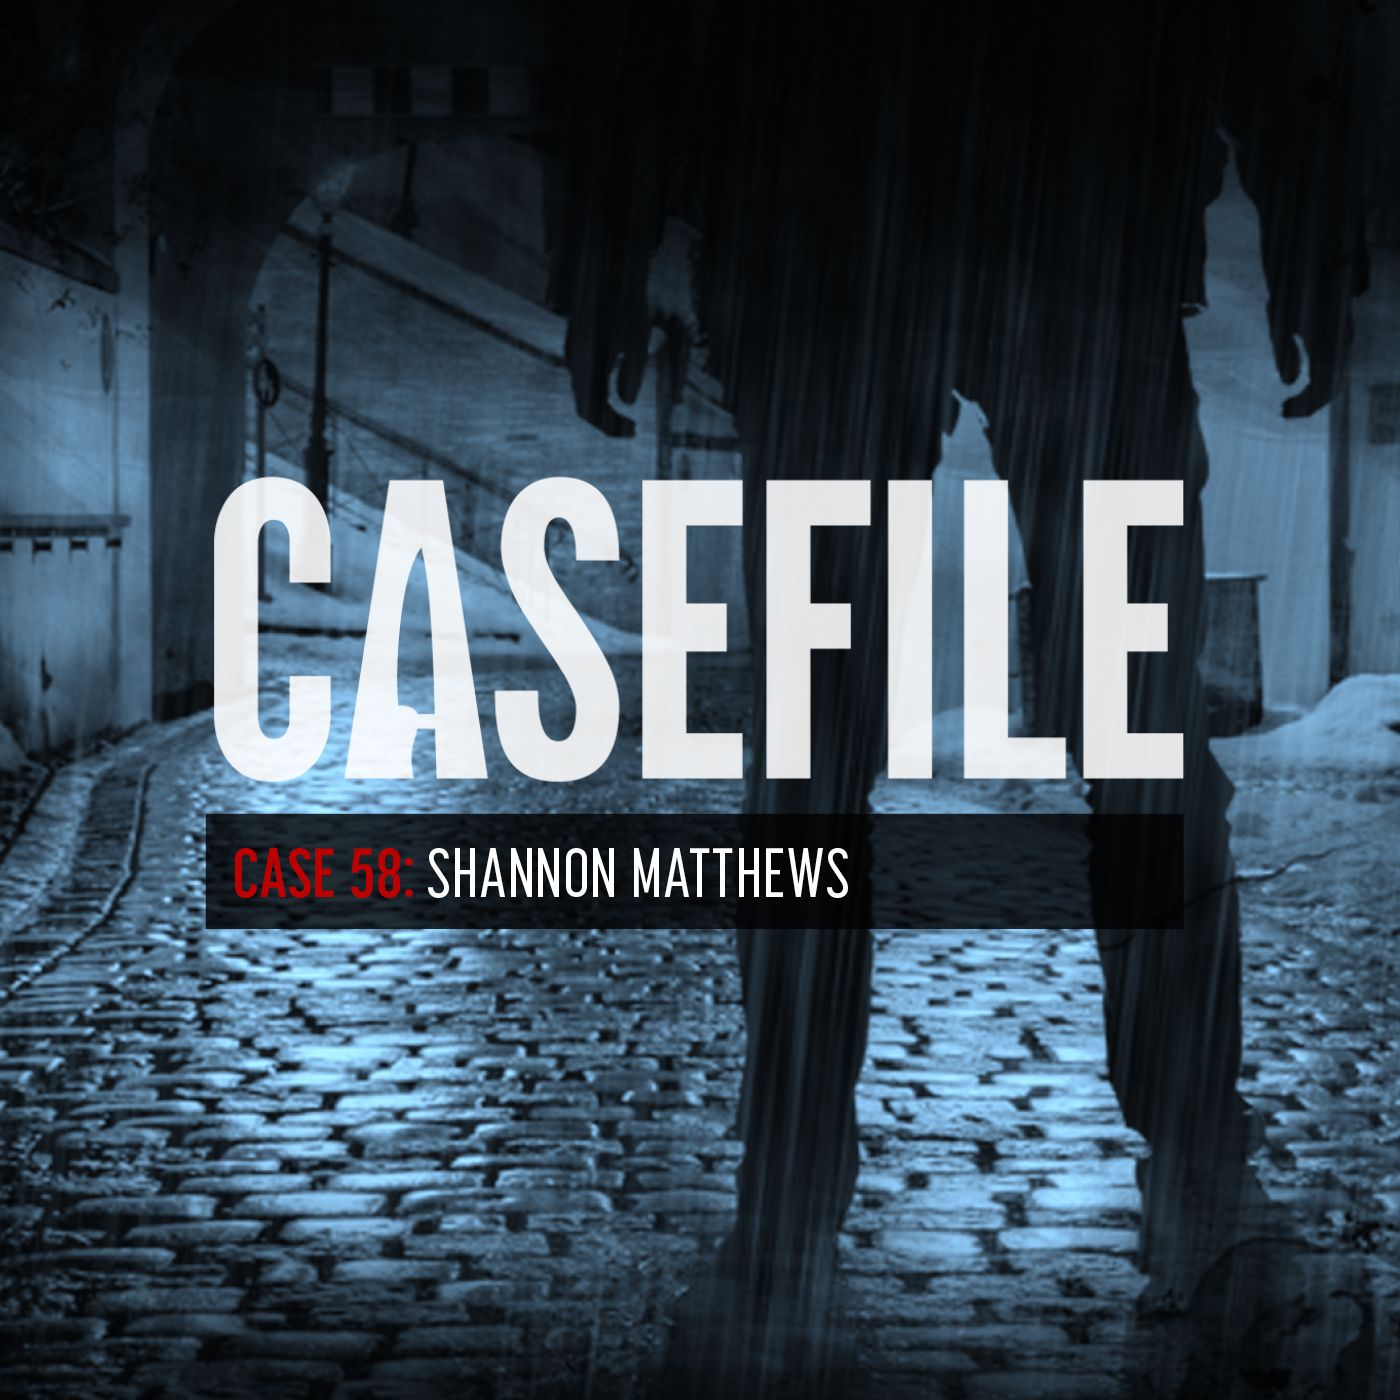 Case 58: Shannon Matthews